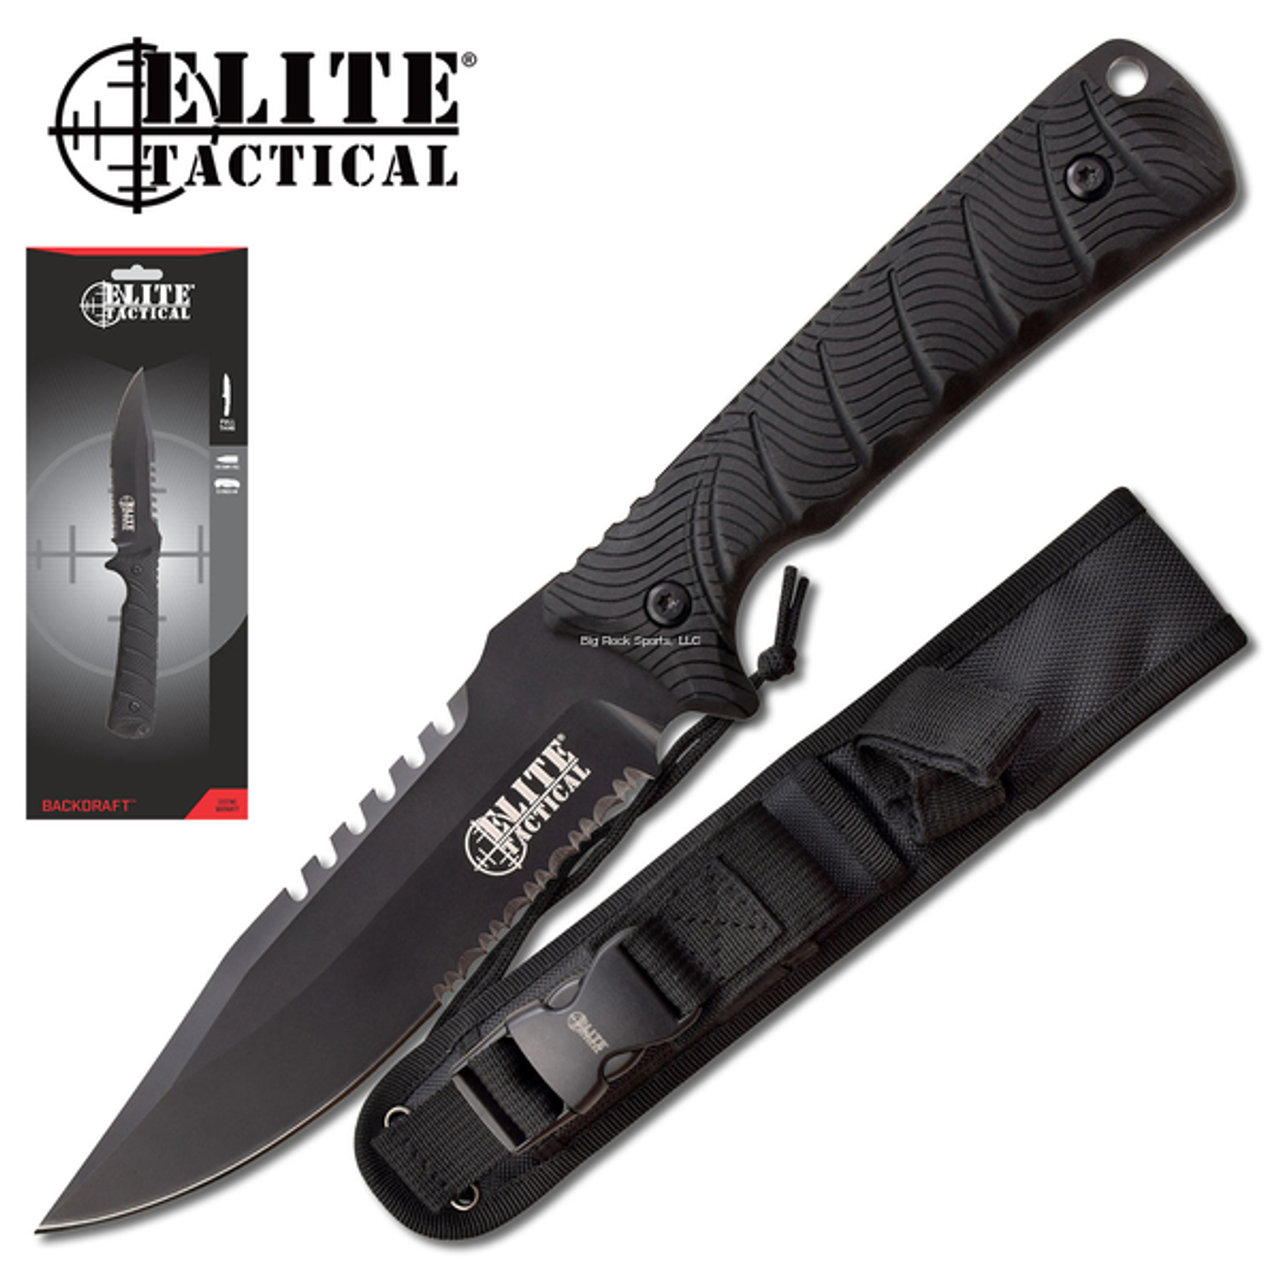 Elite Tactical Backdraft 5" Fixed Knife, 1/2 Serrated Steel Blade